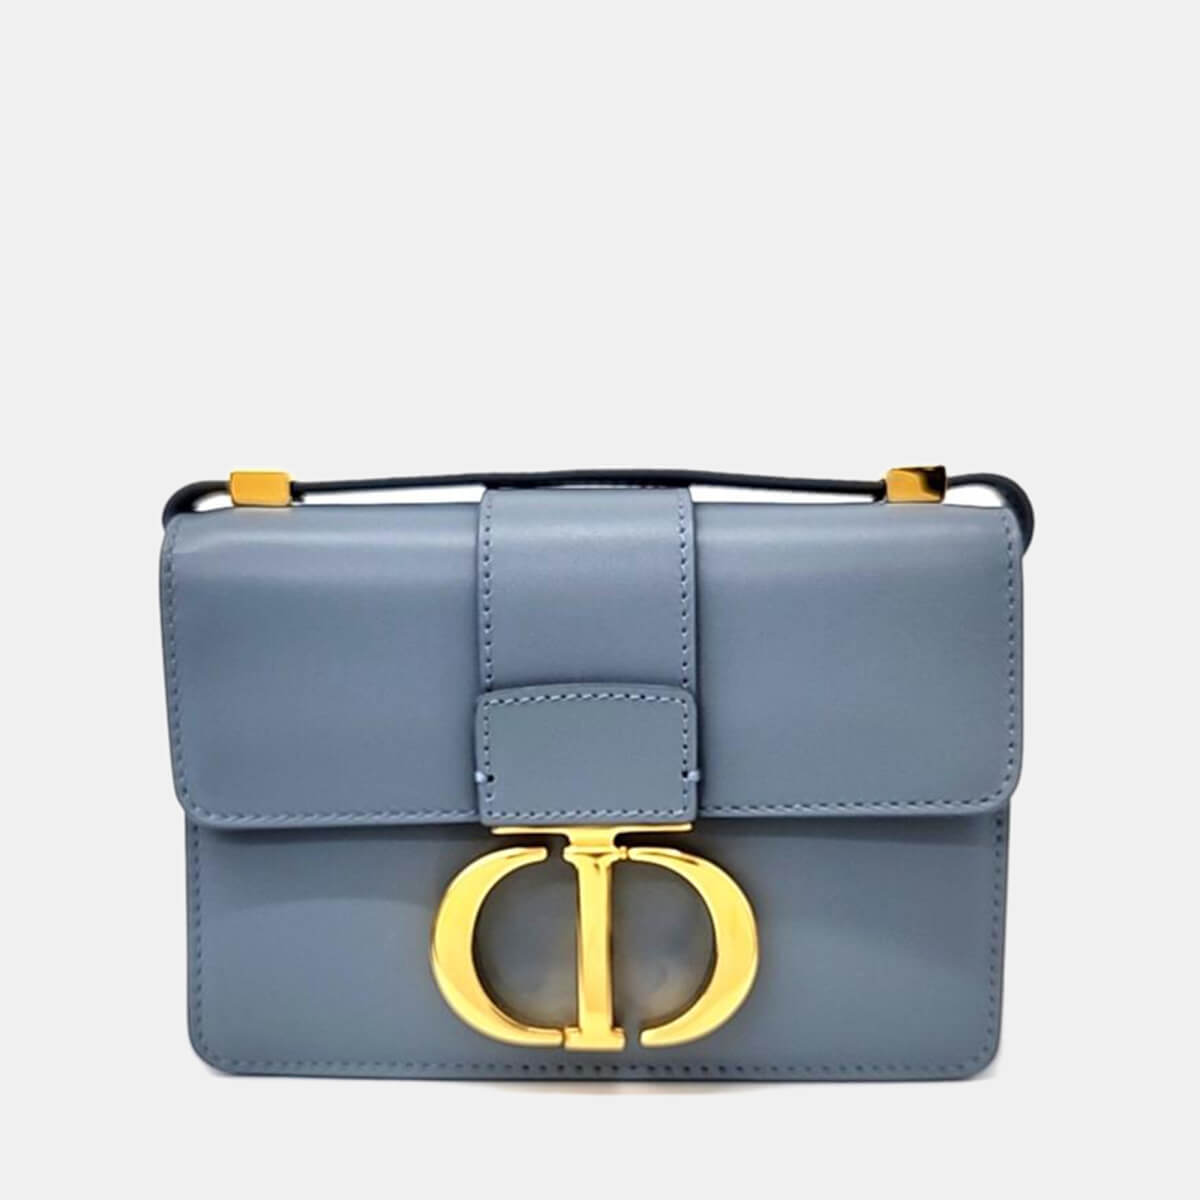 Christian Dior Montaigne Bag 30 Micro bag